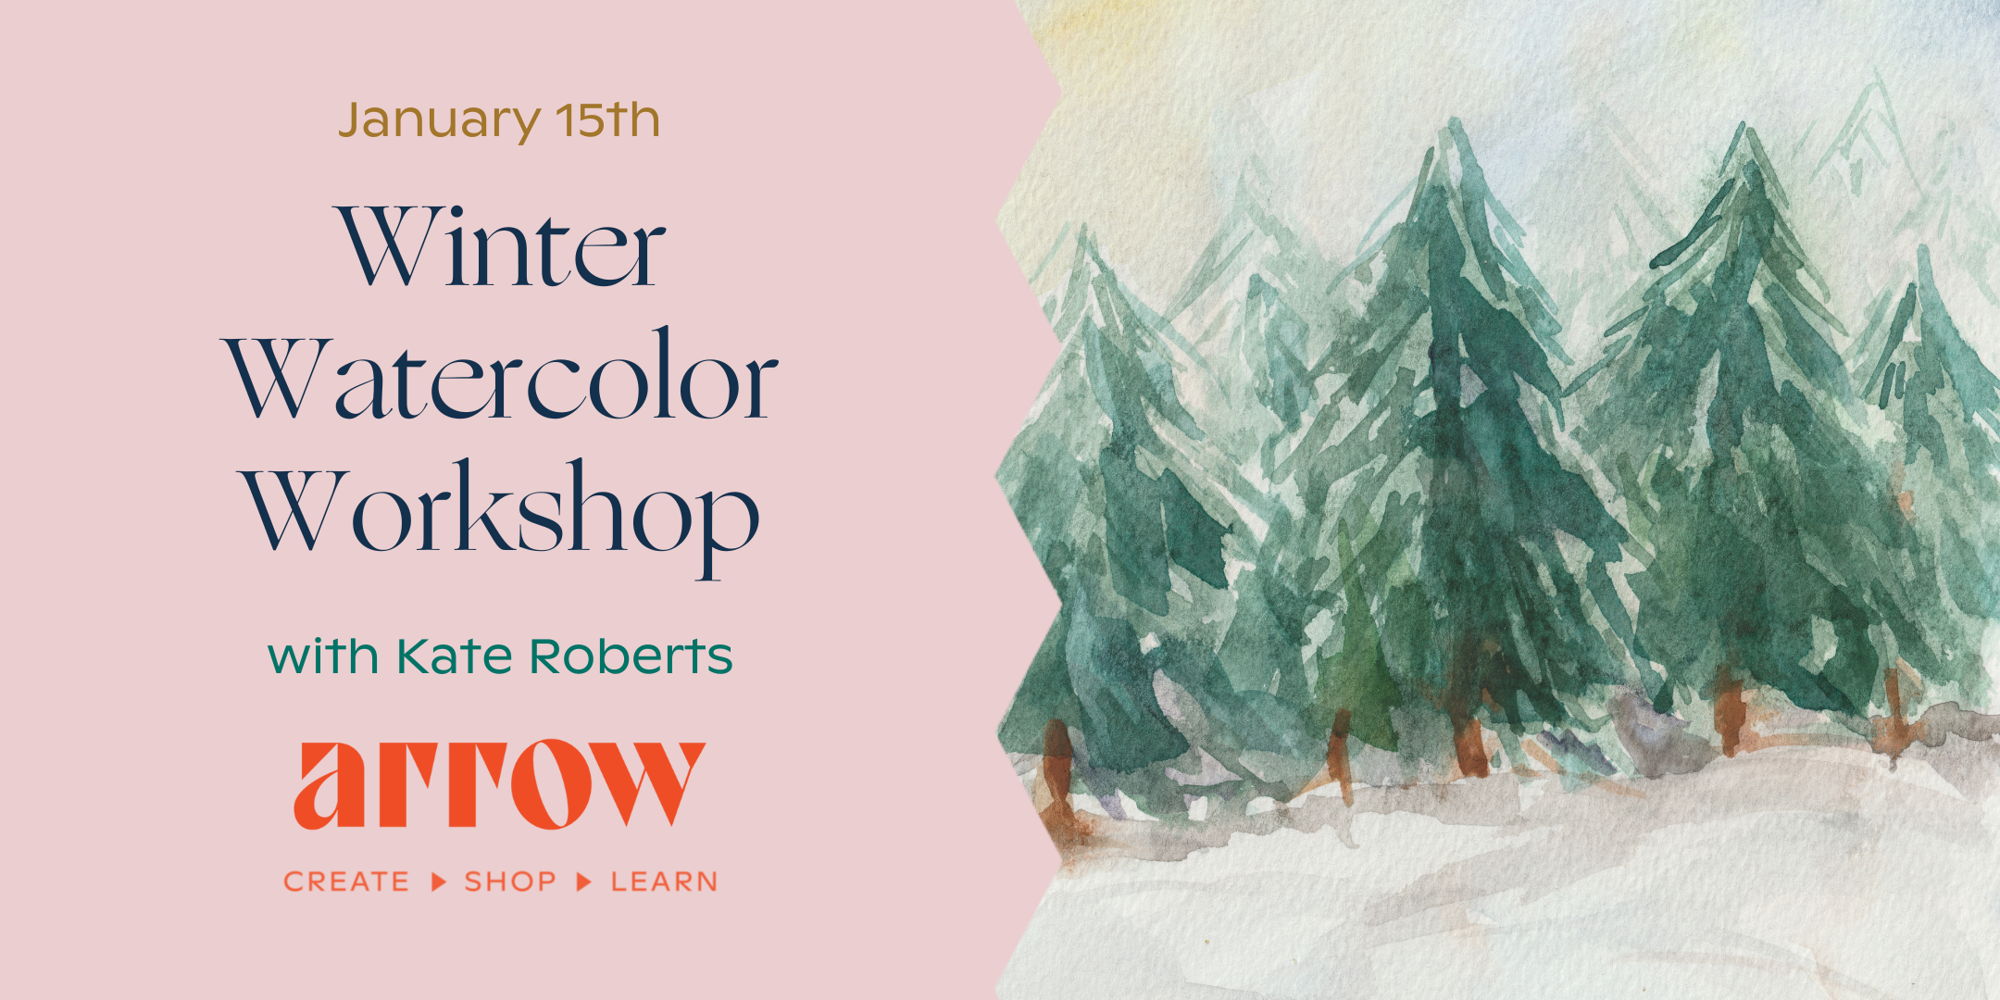 Winter Watercolor Workshop promotional image